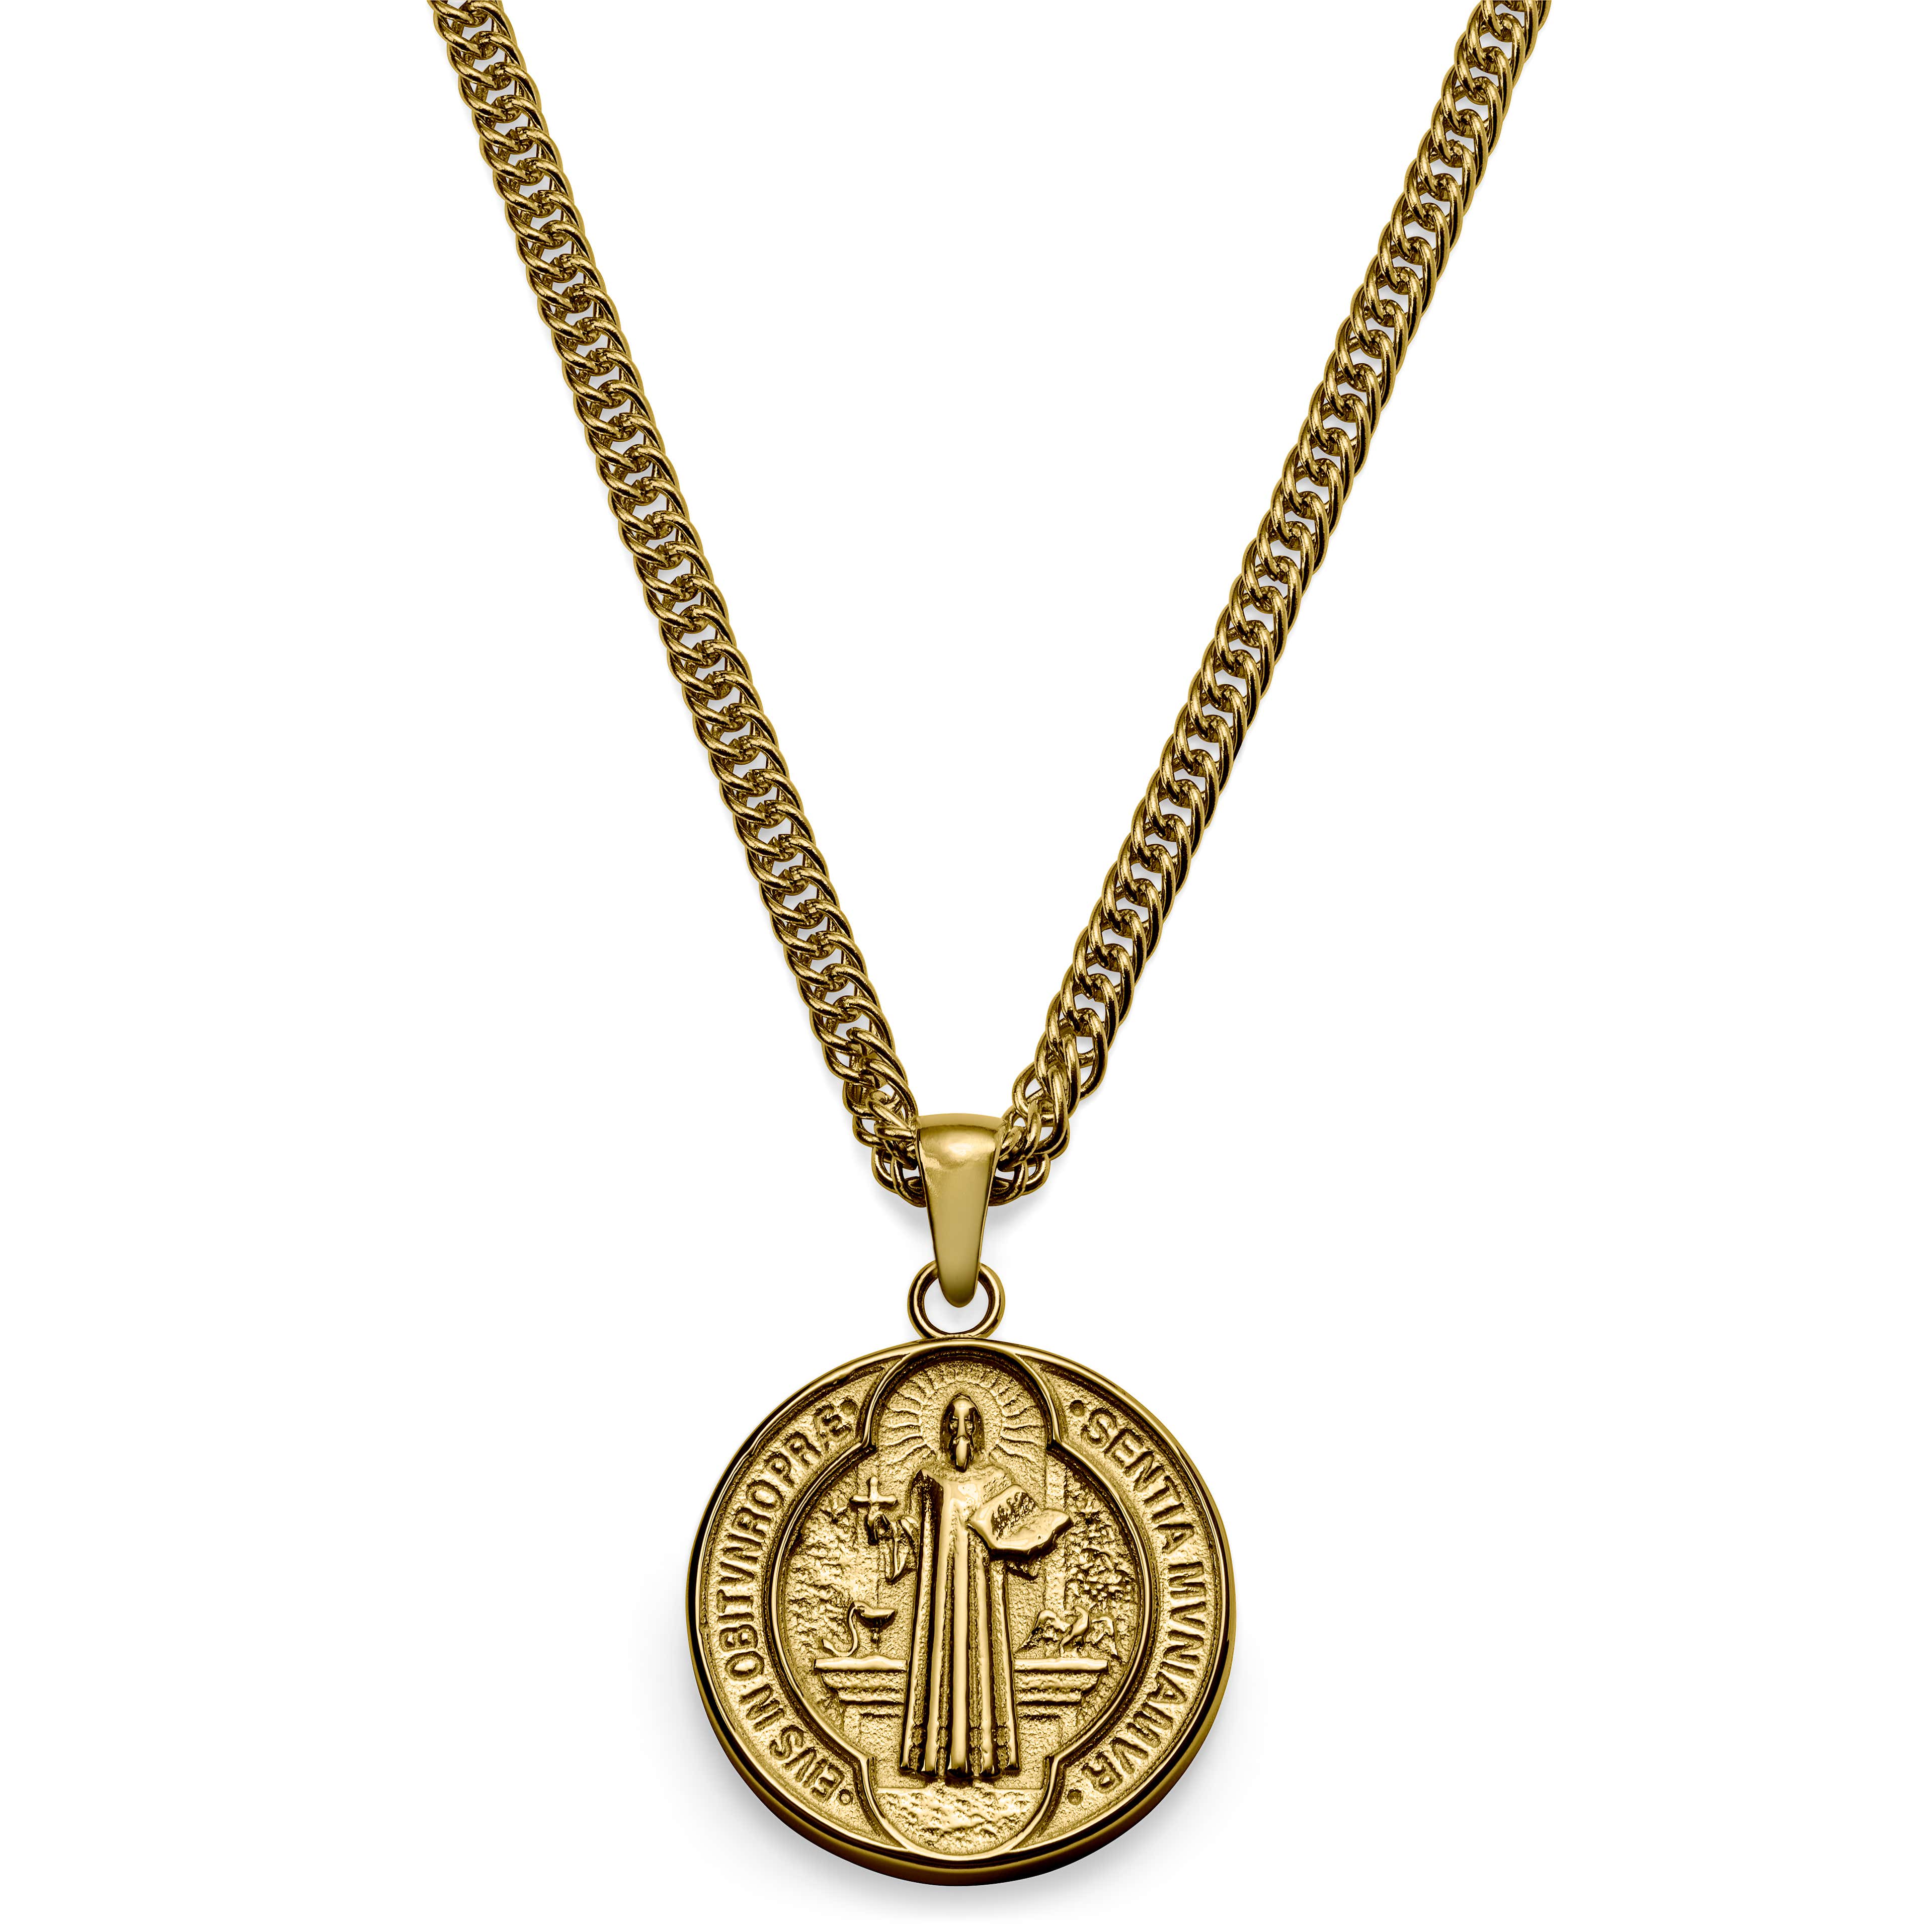 Sanctus | Vintage náhrdelník zlaté barvy s medailí svatého Benedikta